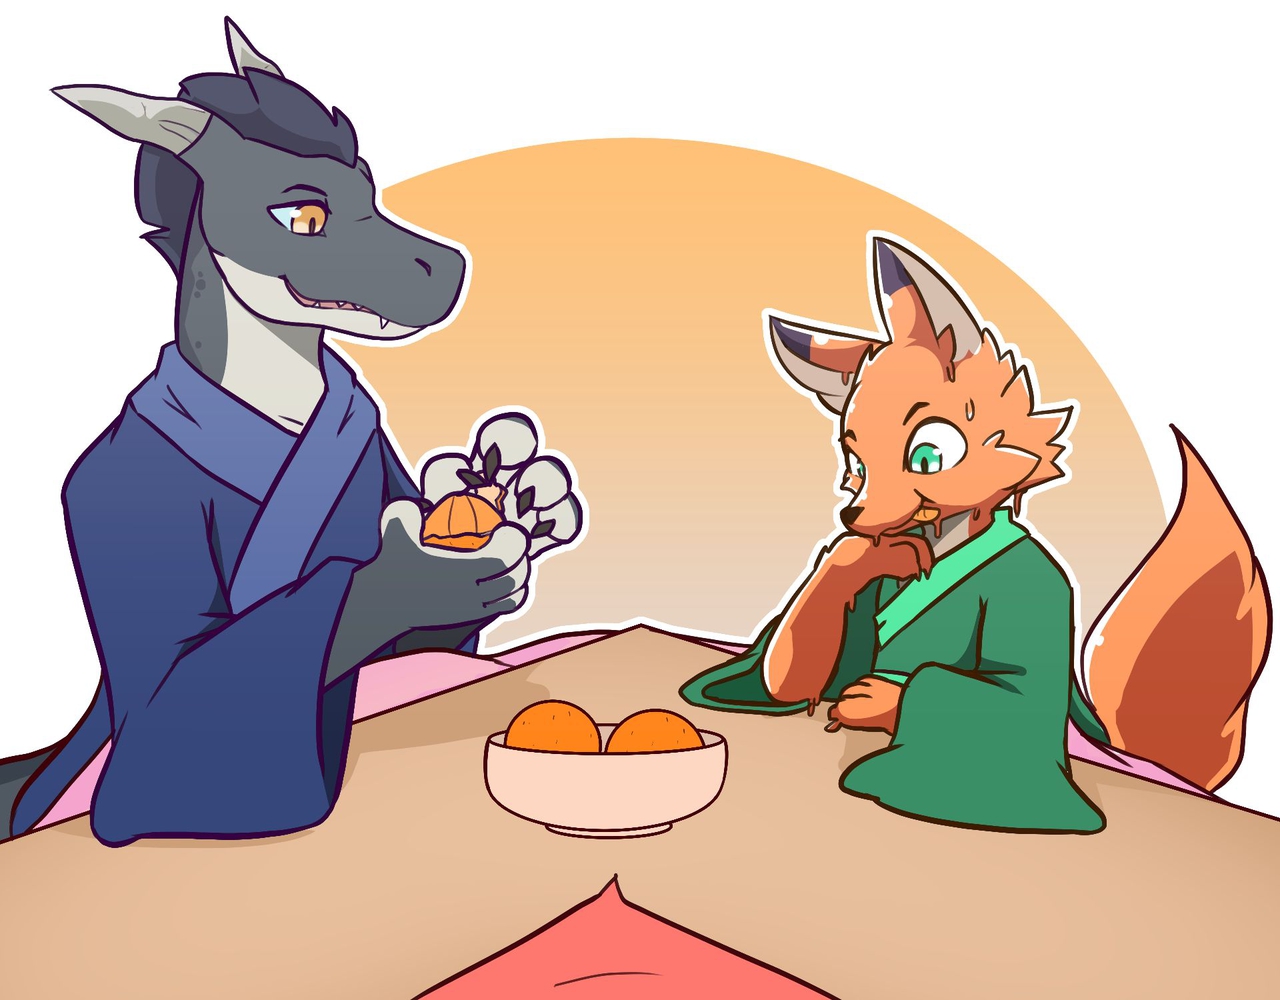 Sharing Some Oranges